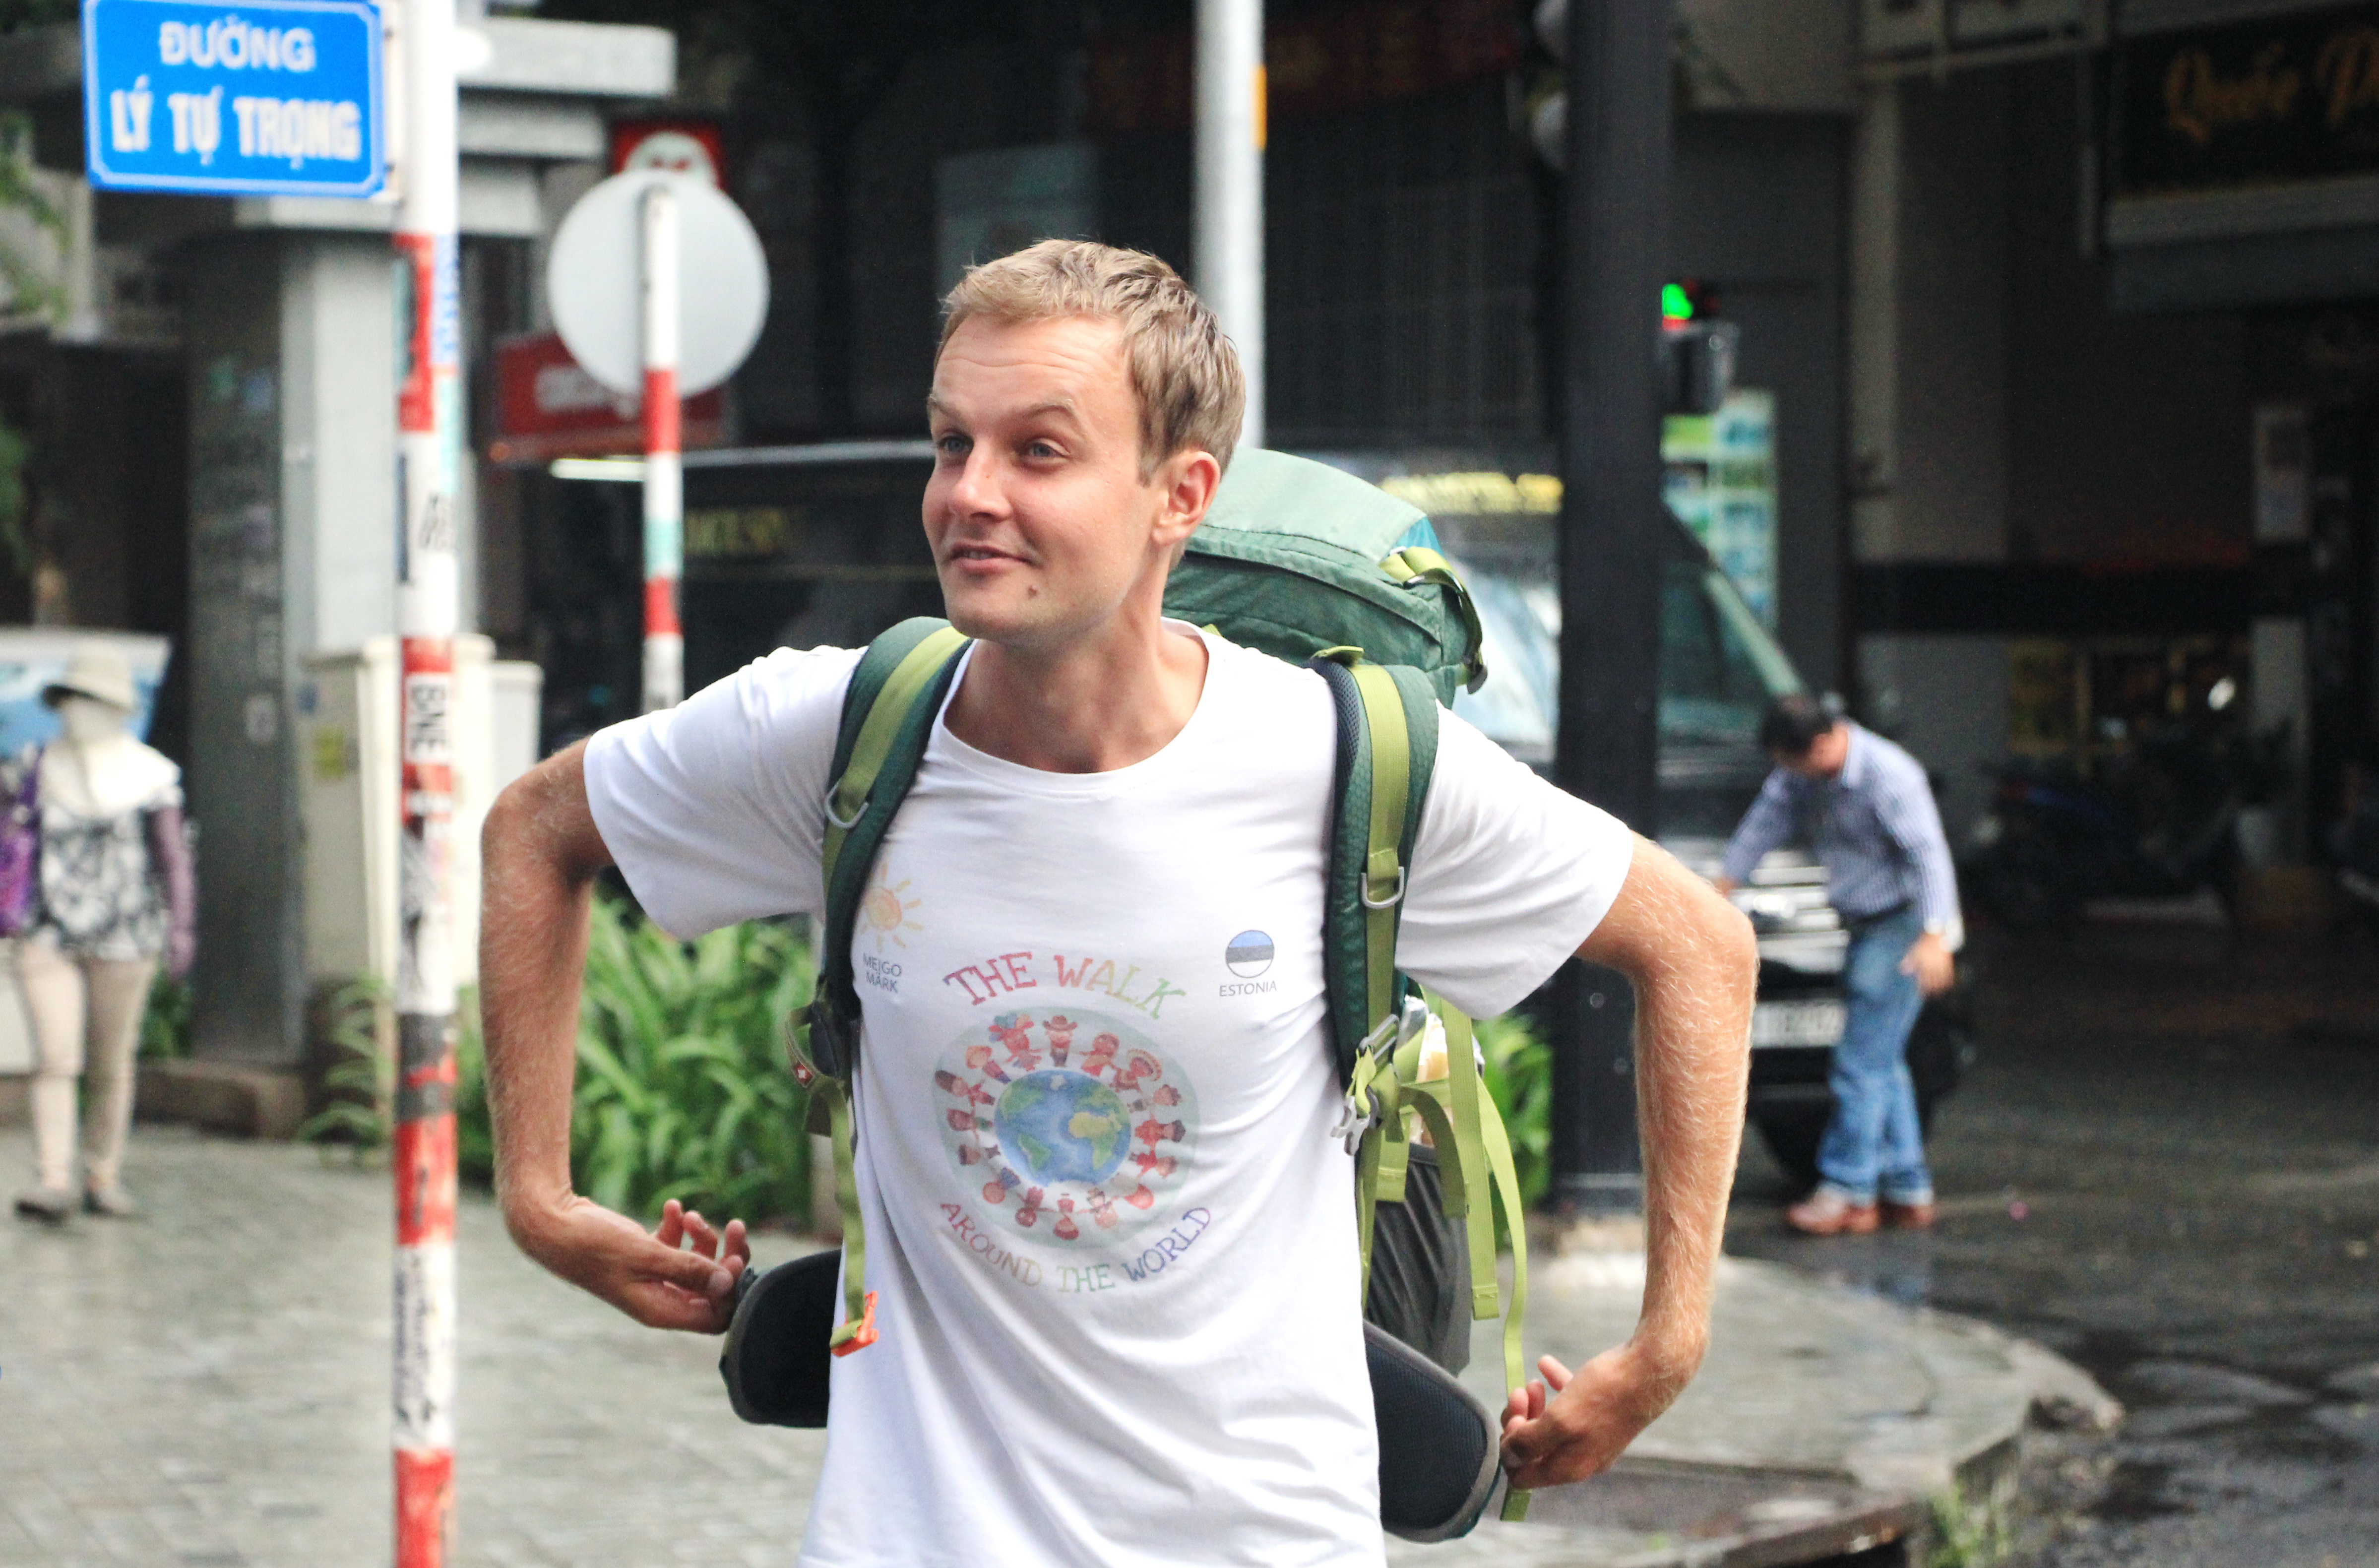 Estonian musician walking around the world completes Vietnam